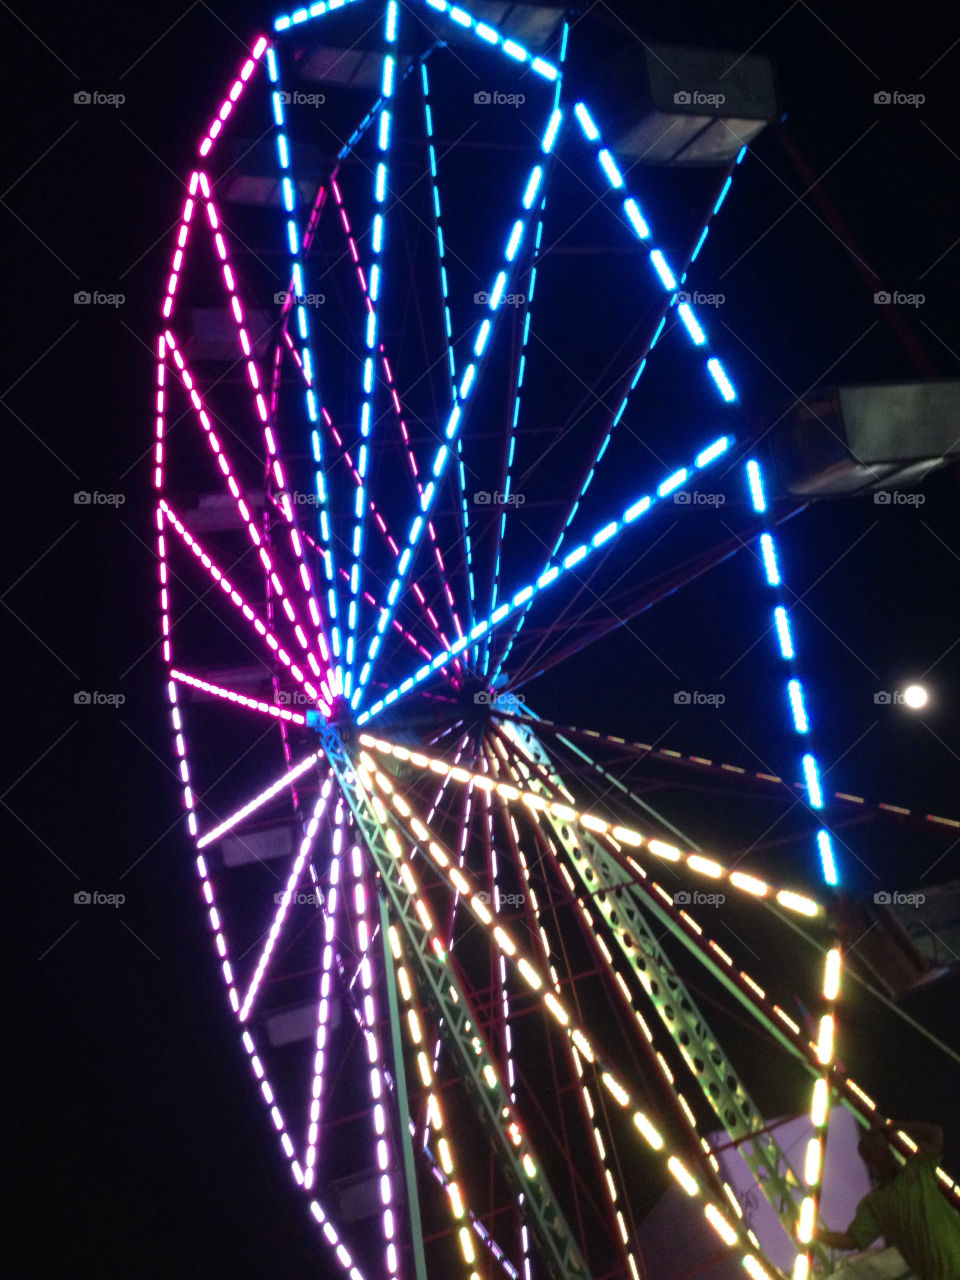 ferris wheel fun lights by walbam